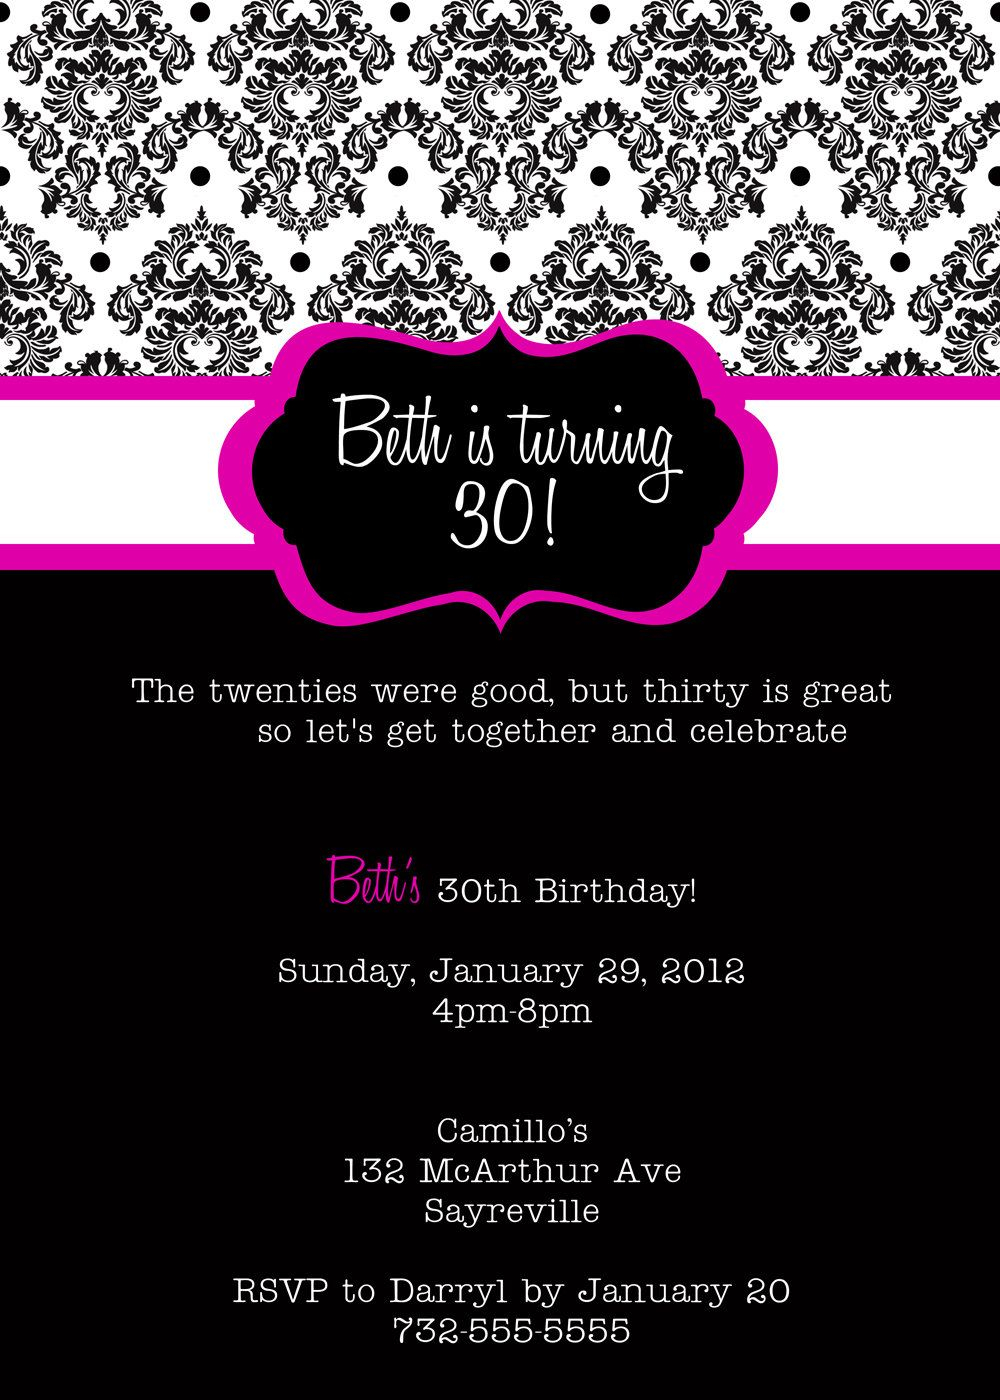 Vintage 30th Birthday Invitations Sweet Party In 2019 Free regarding measurements 1000 X 1400